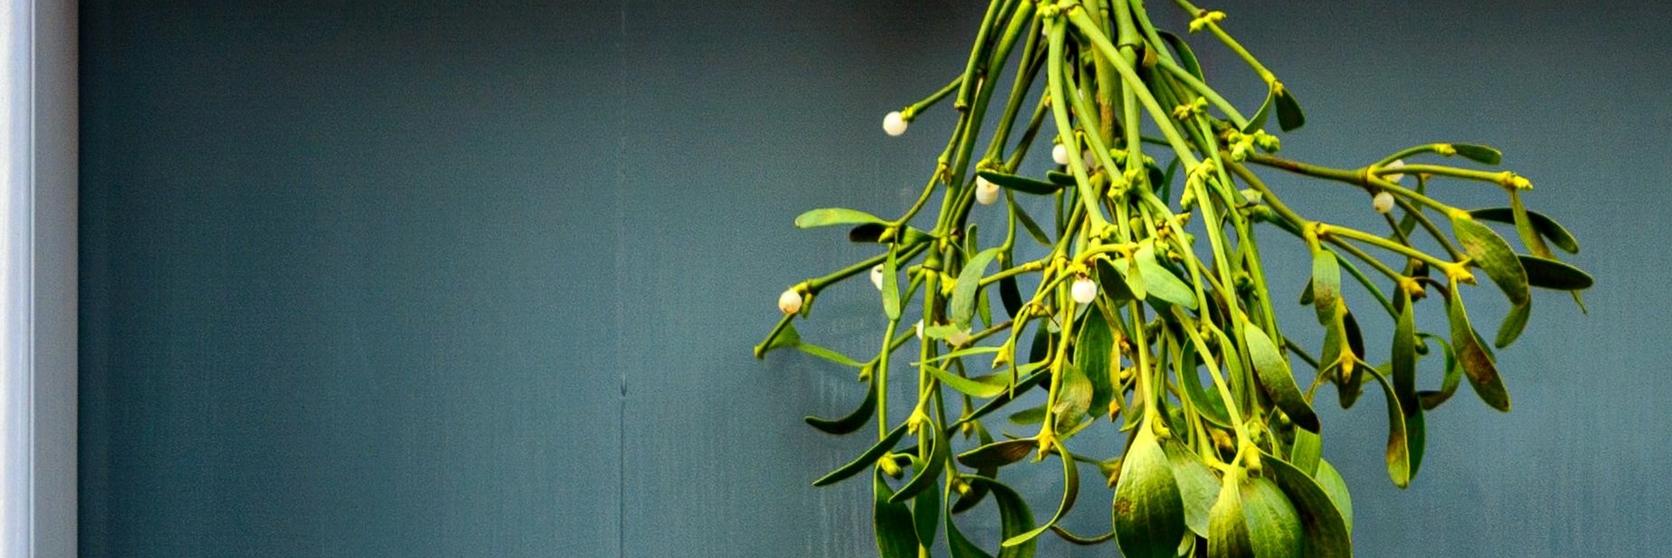 mistletoe-hanging